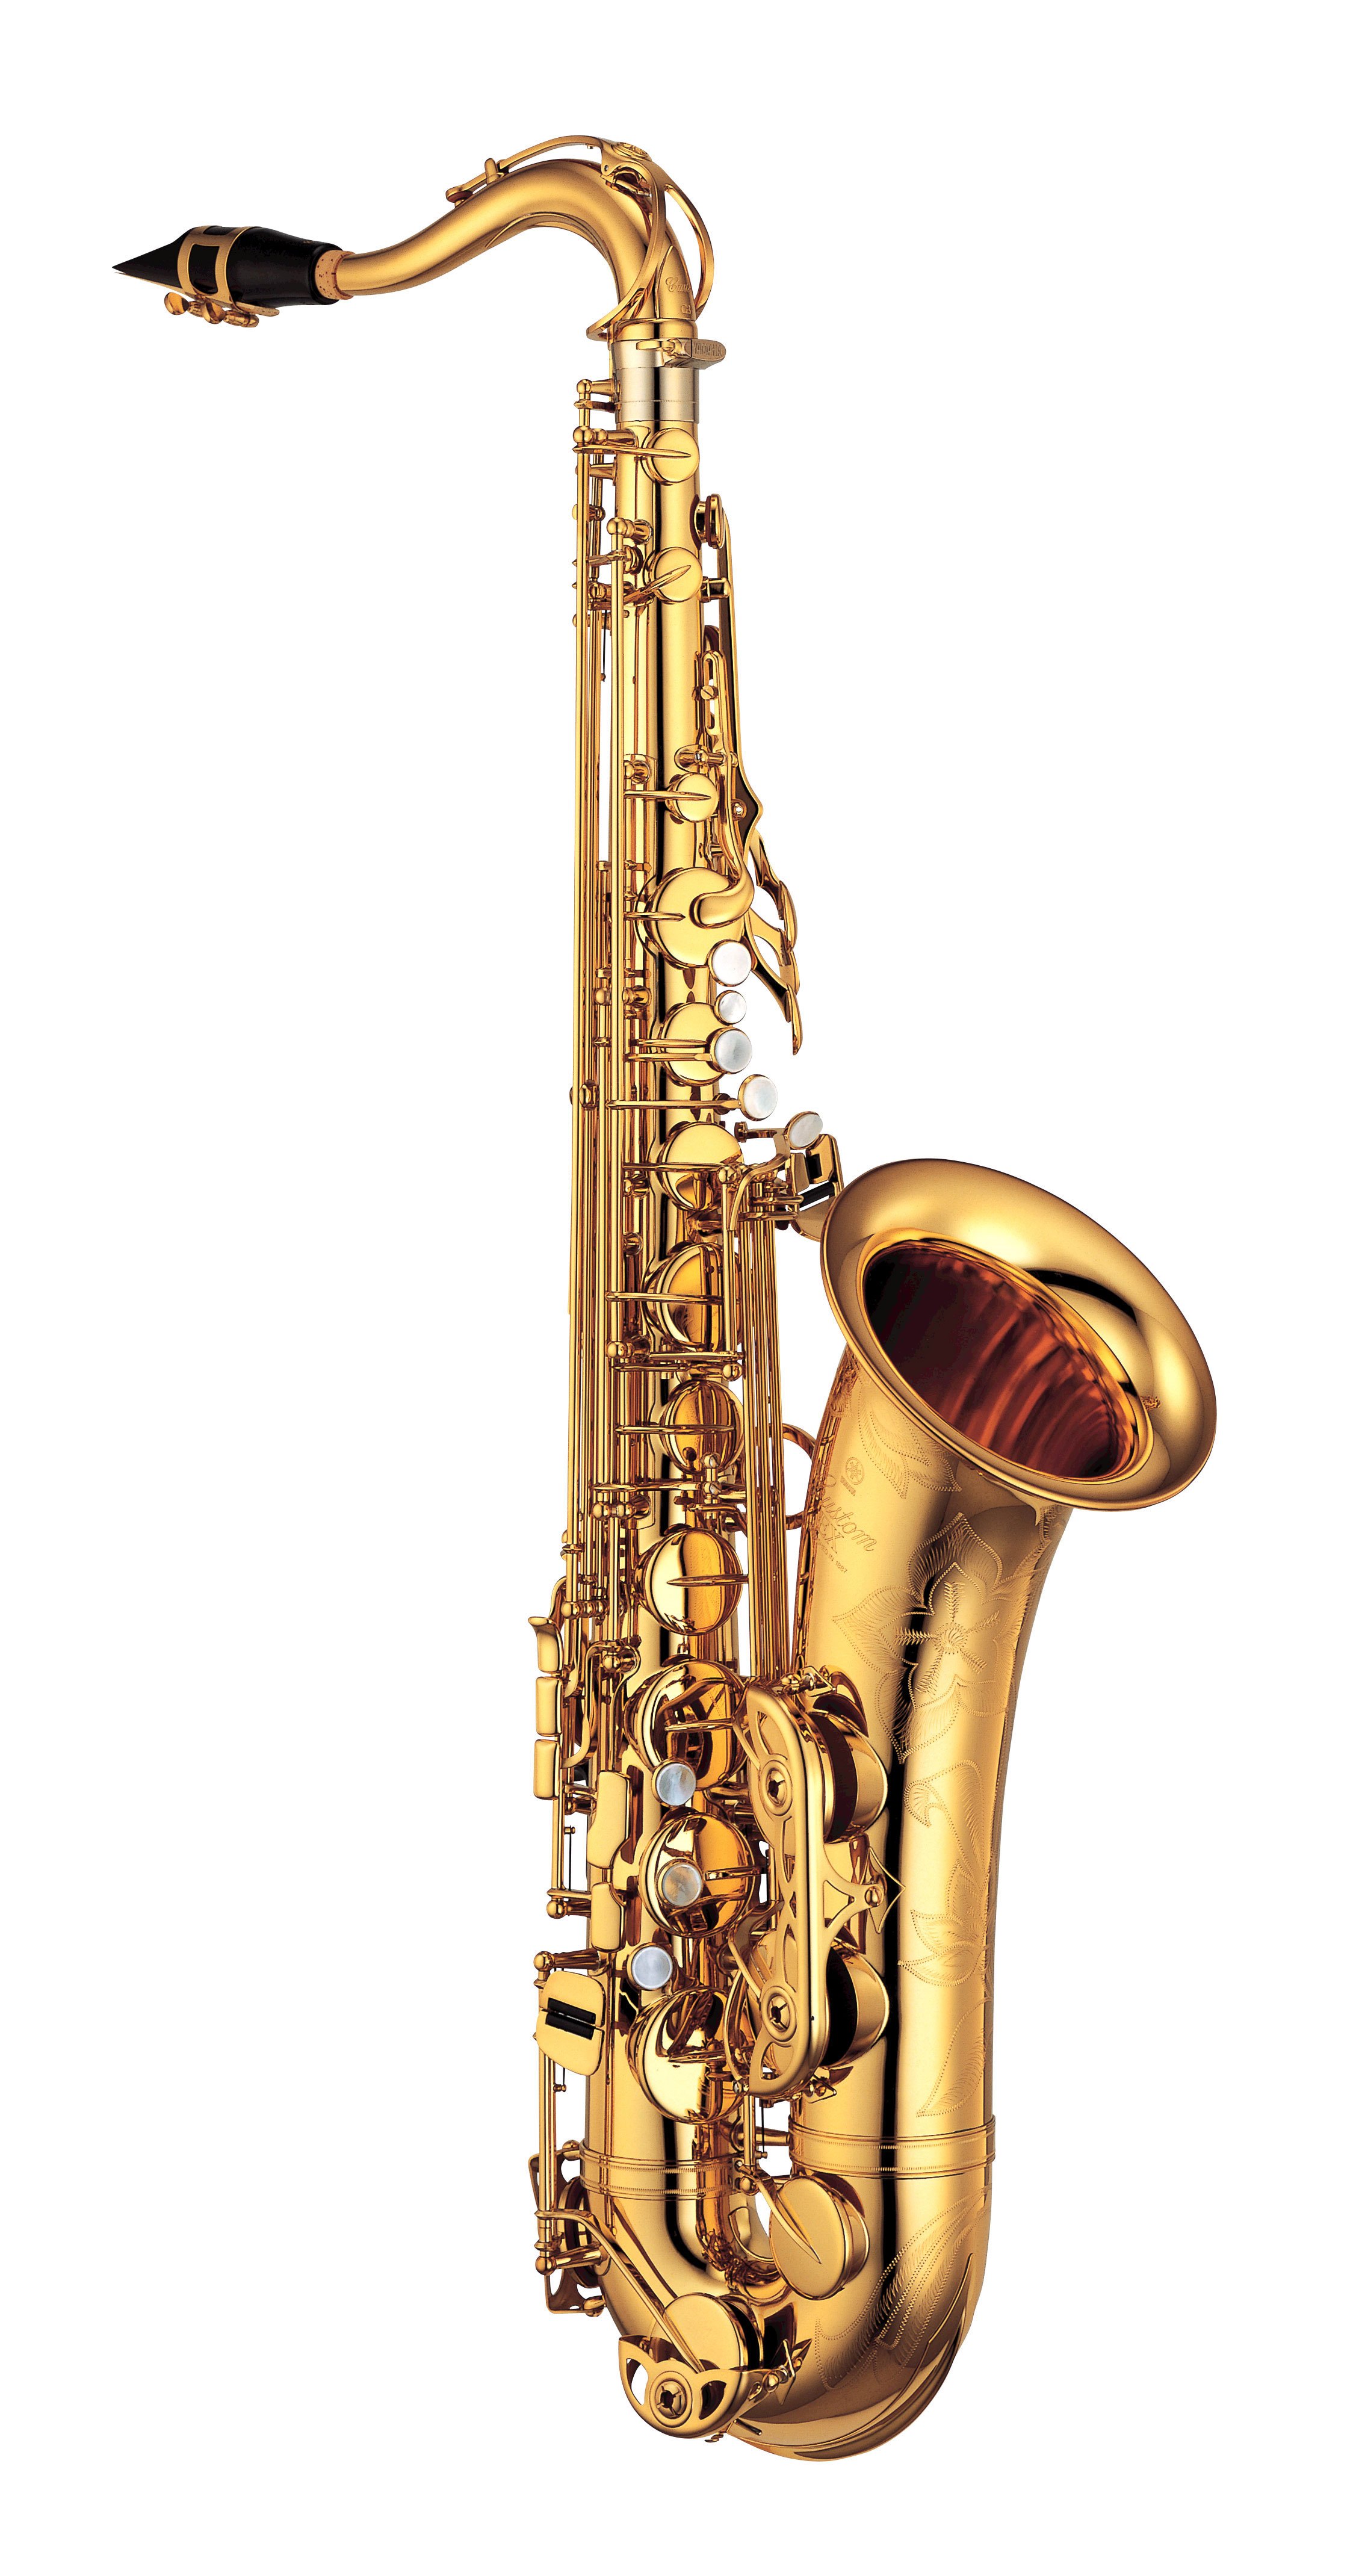 the saxophone